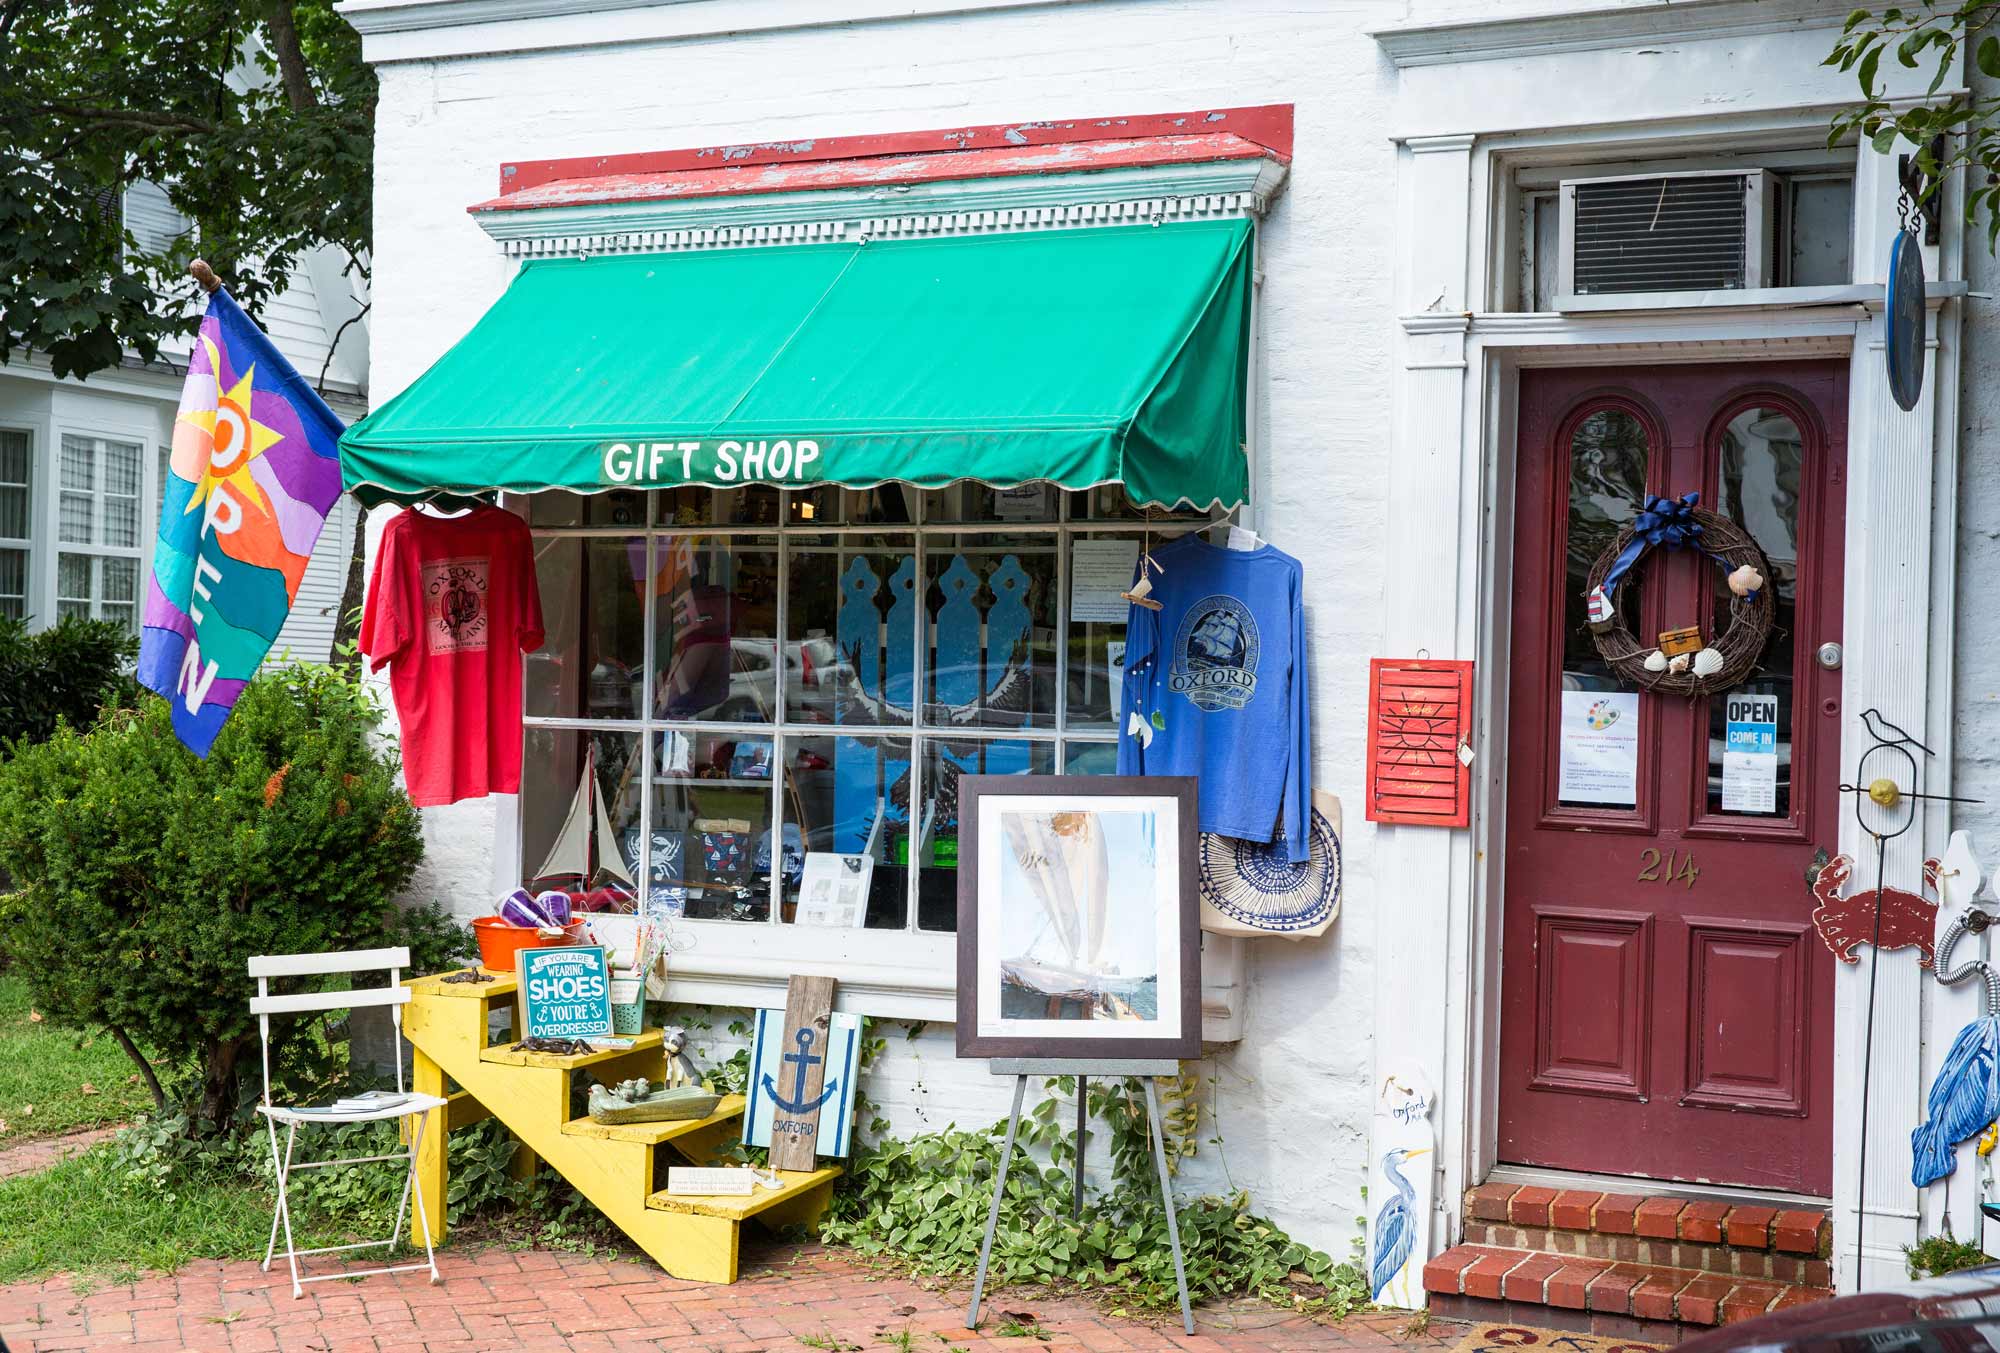 Cute shop with a green awning along a brick sidewalk